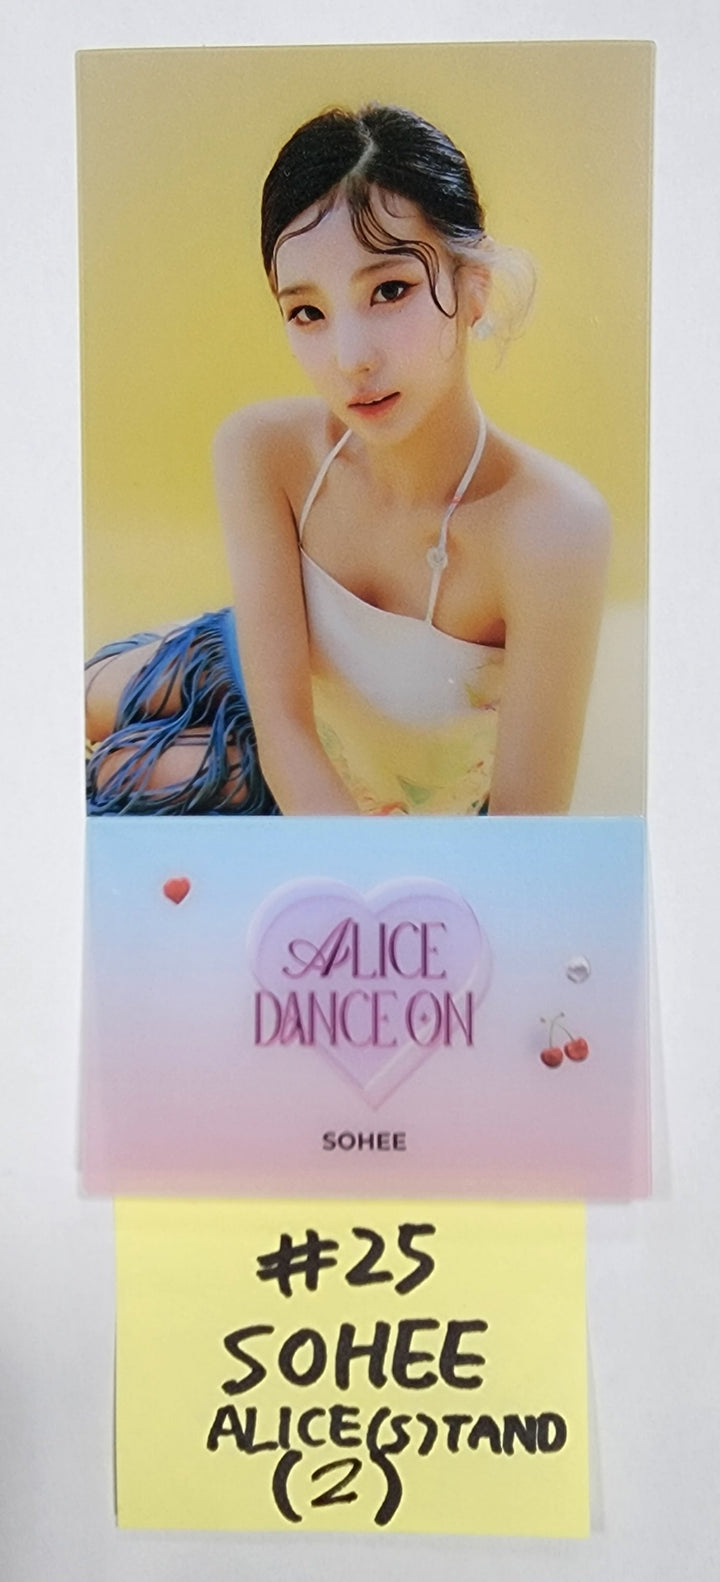 ALICE "DANCE ON" - 공식 포토카드, 메시지 카드, ALCE(S)TAND